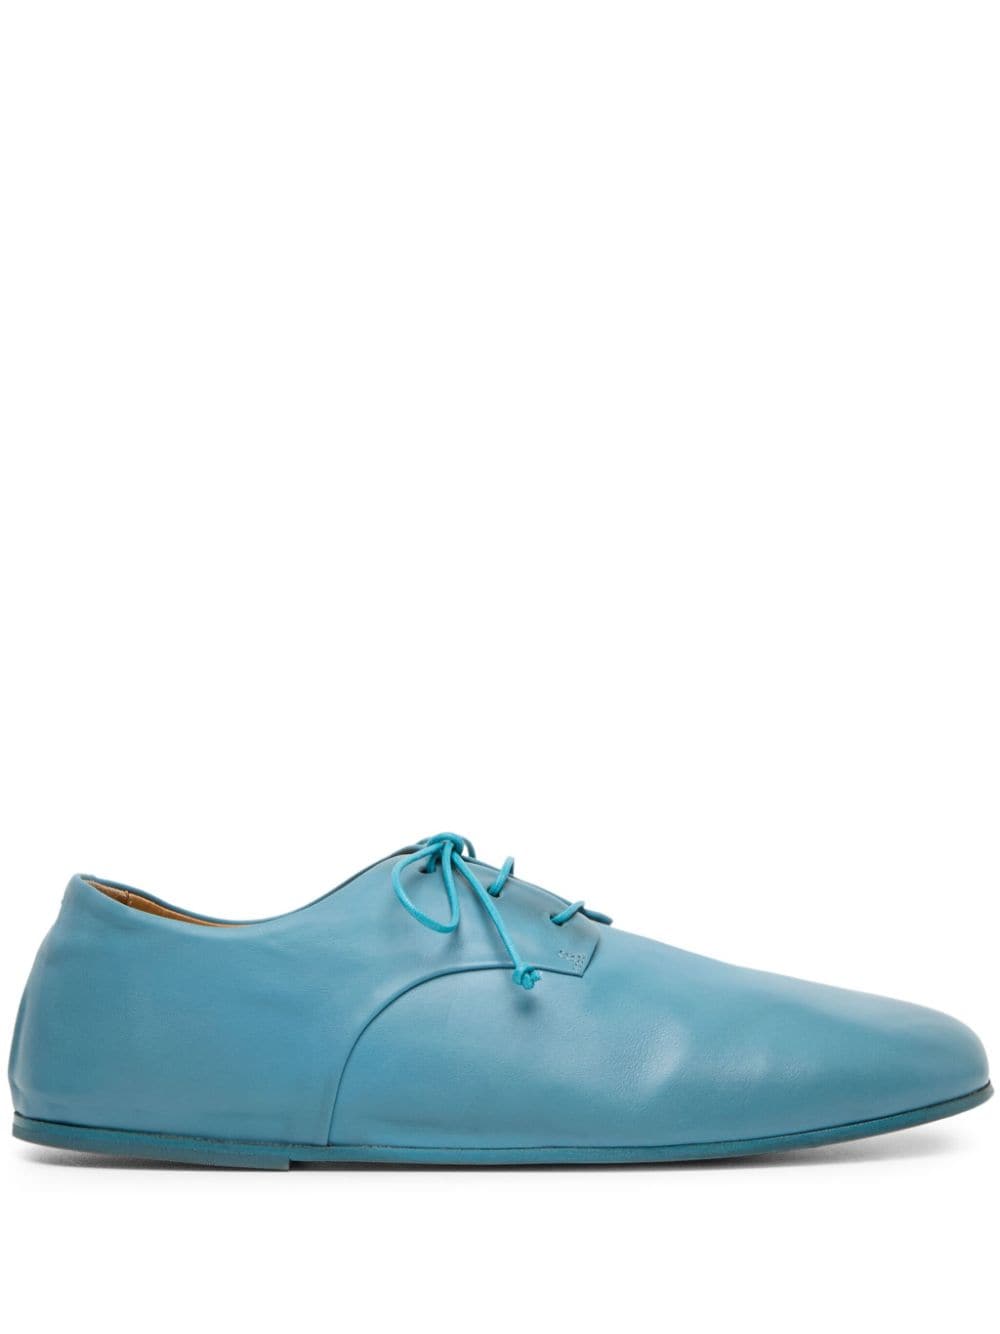 Marsèll leather derby shoes - Blue von Marsèll